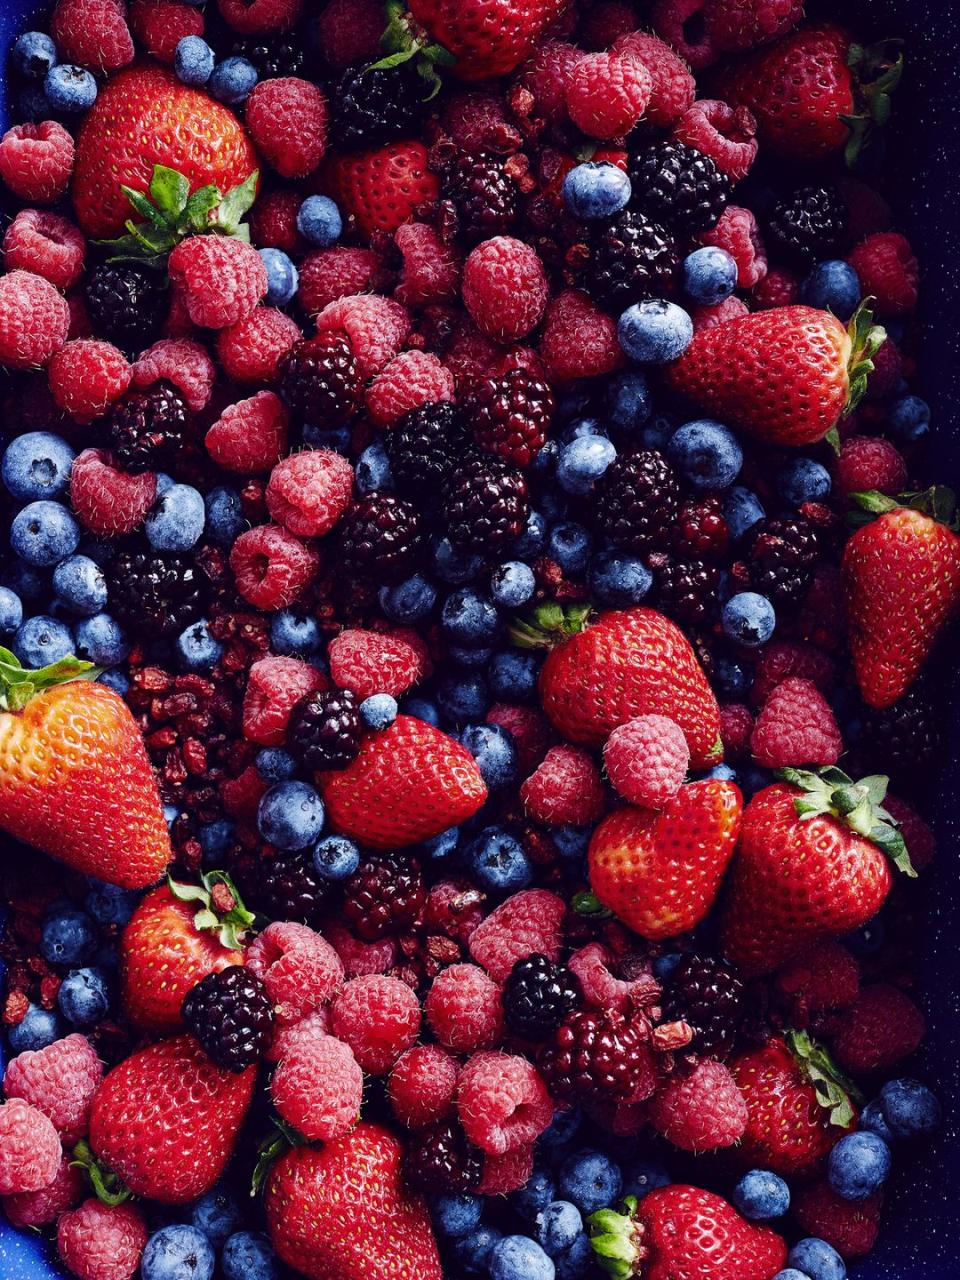 16) Berries